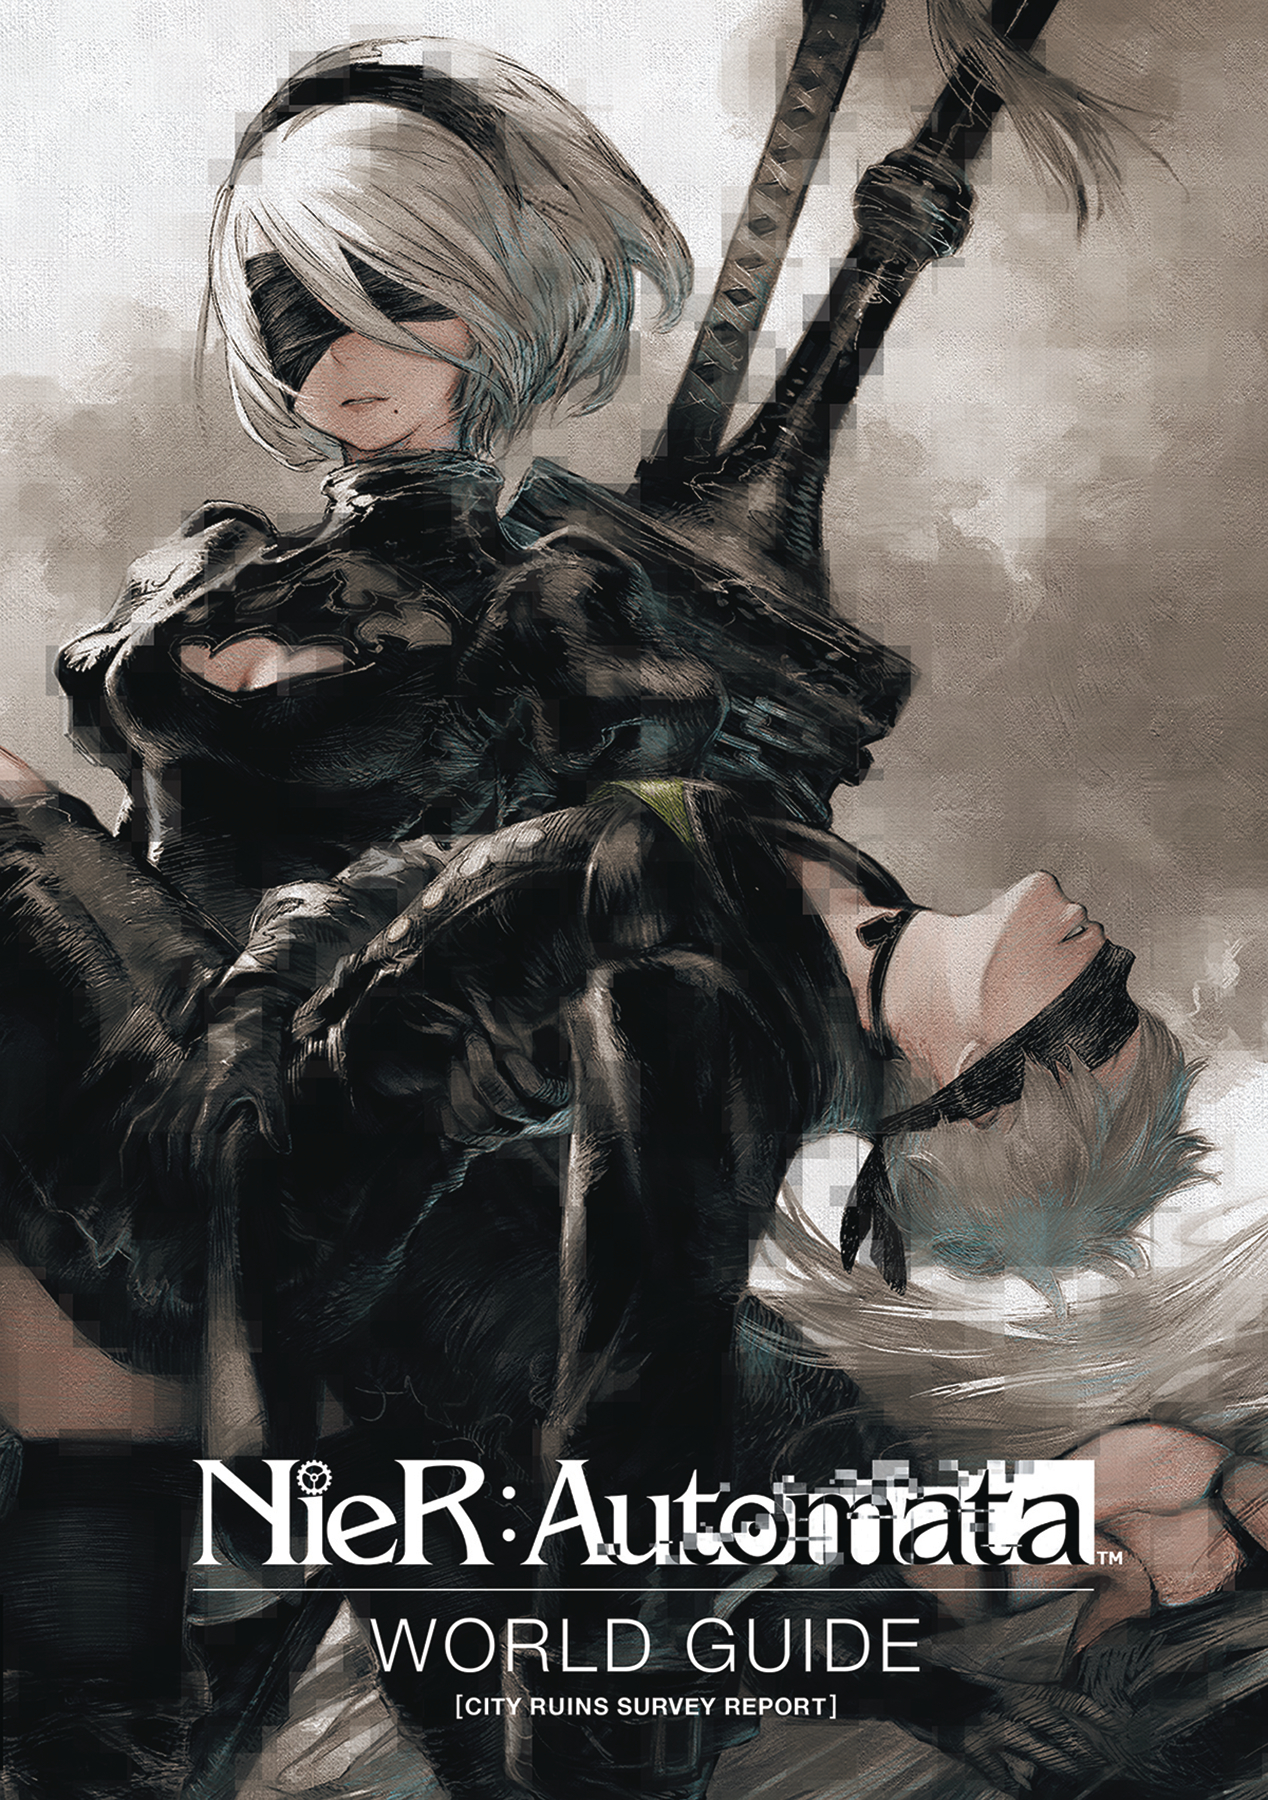 Nier Automata World Guide Hardcover Volume 1